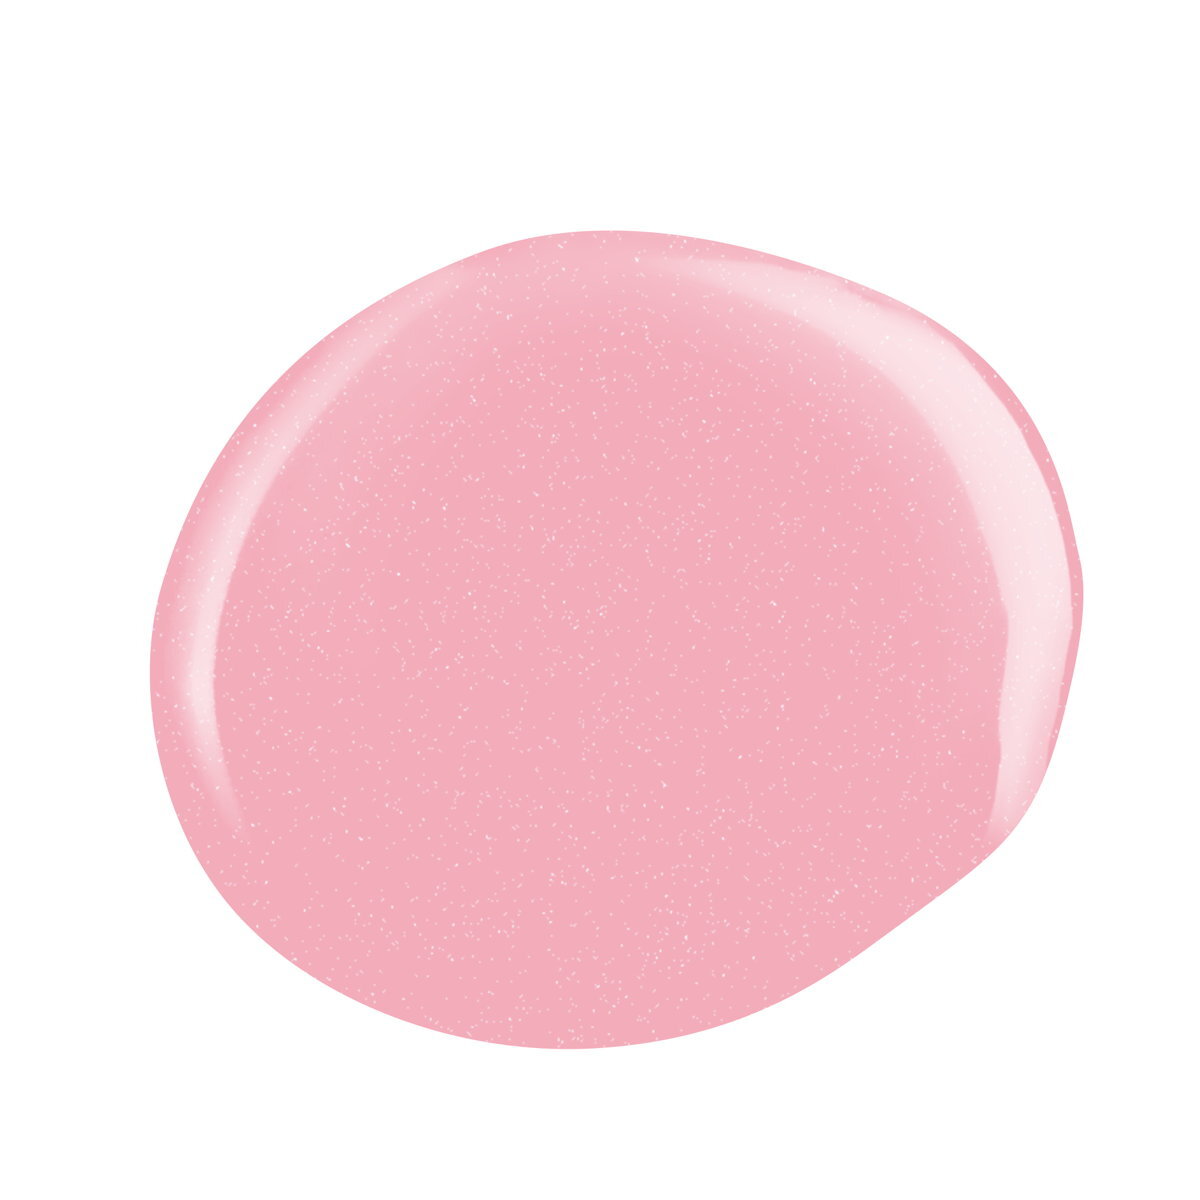 KINETICS Keramický bázový gel lak - SHIELD (HEMA FREE) - Bright Pink Silver #908 - 15 ml